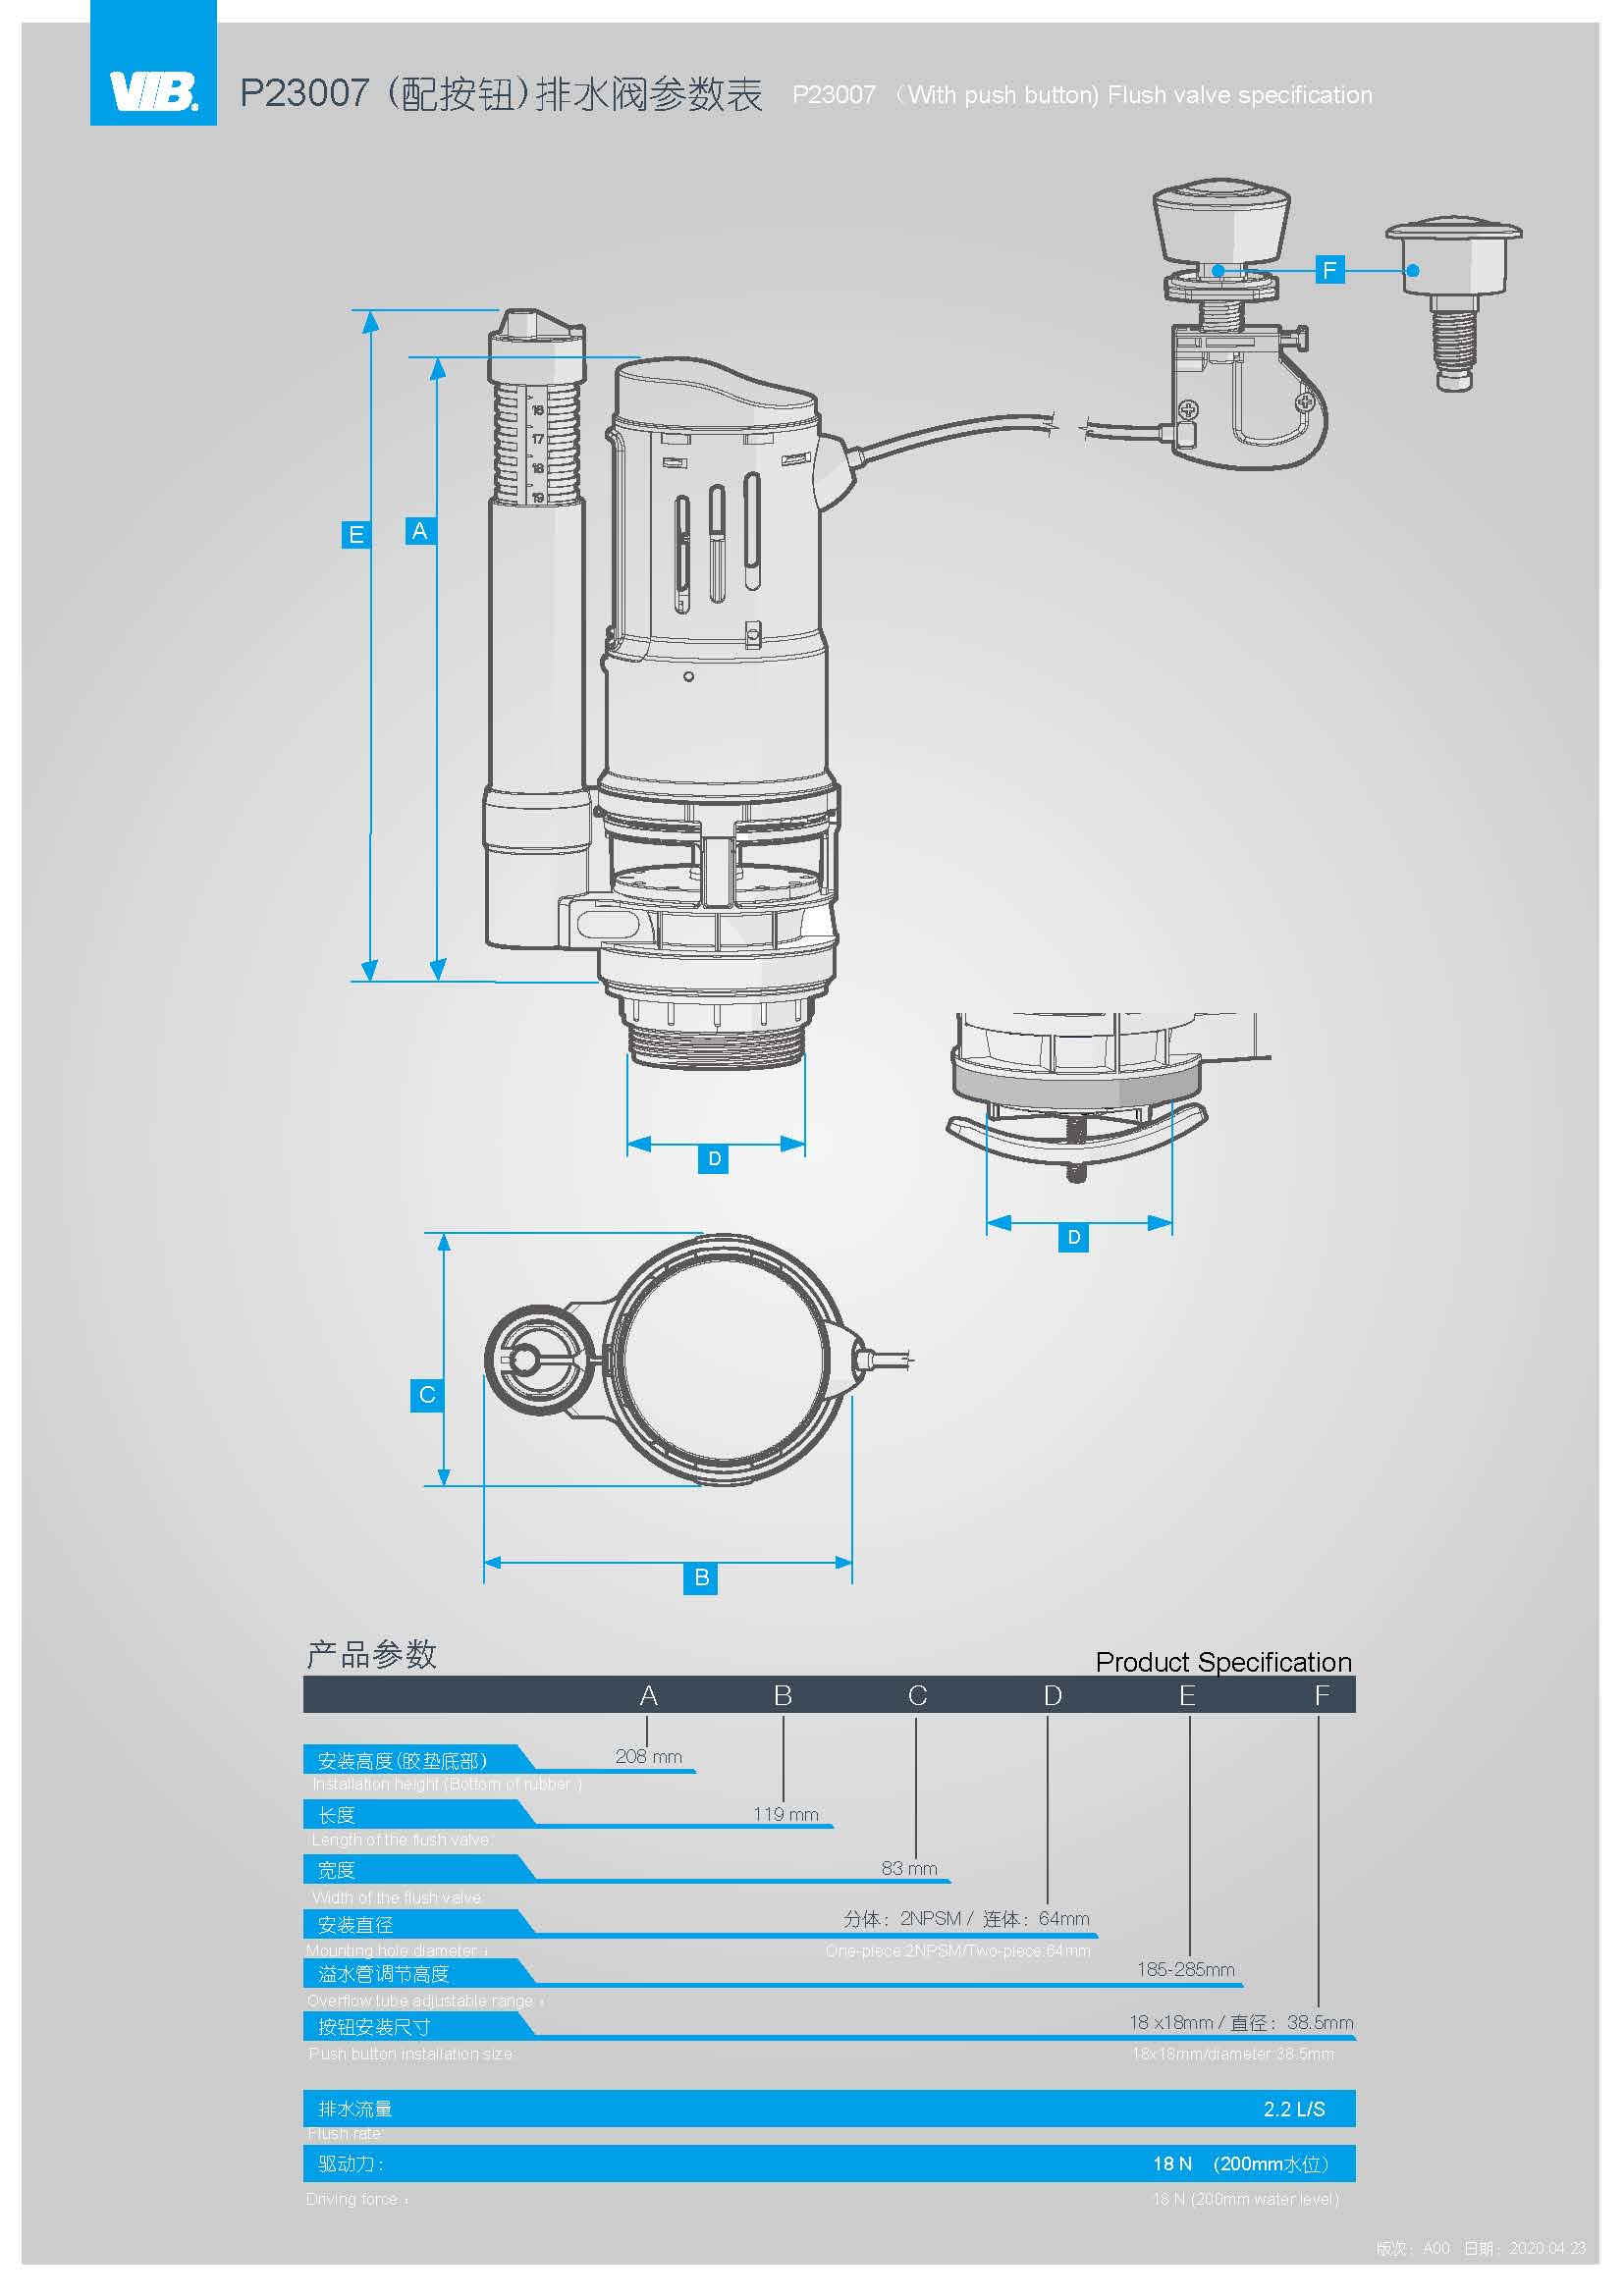 P23007 one-piece Flush valve specification.jpg